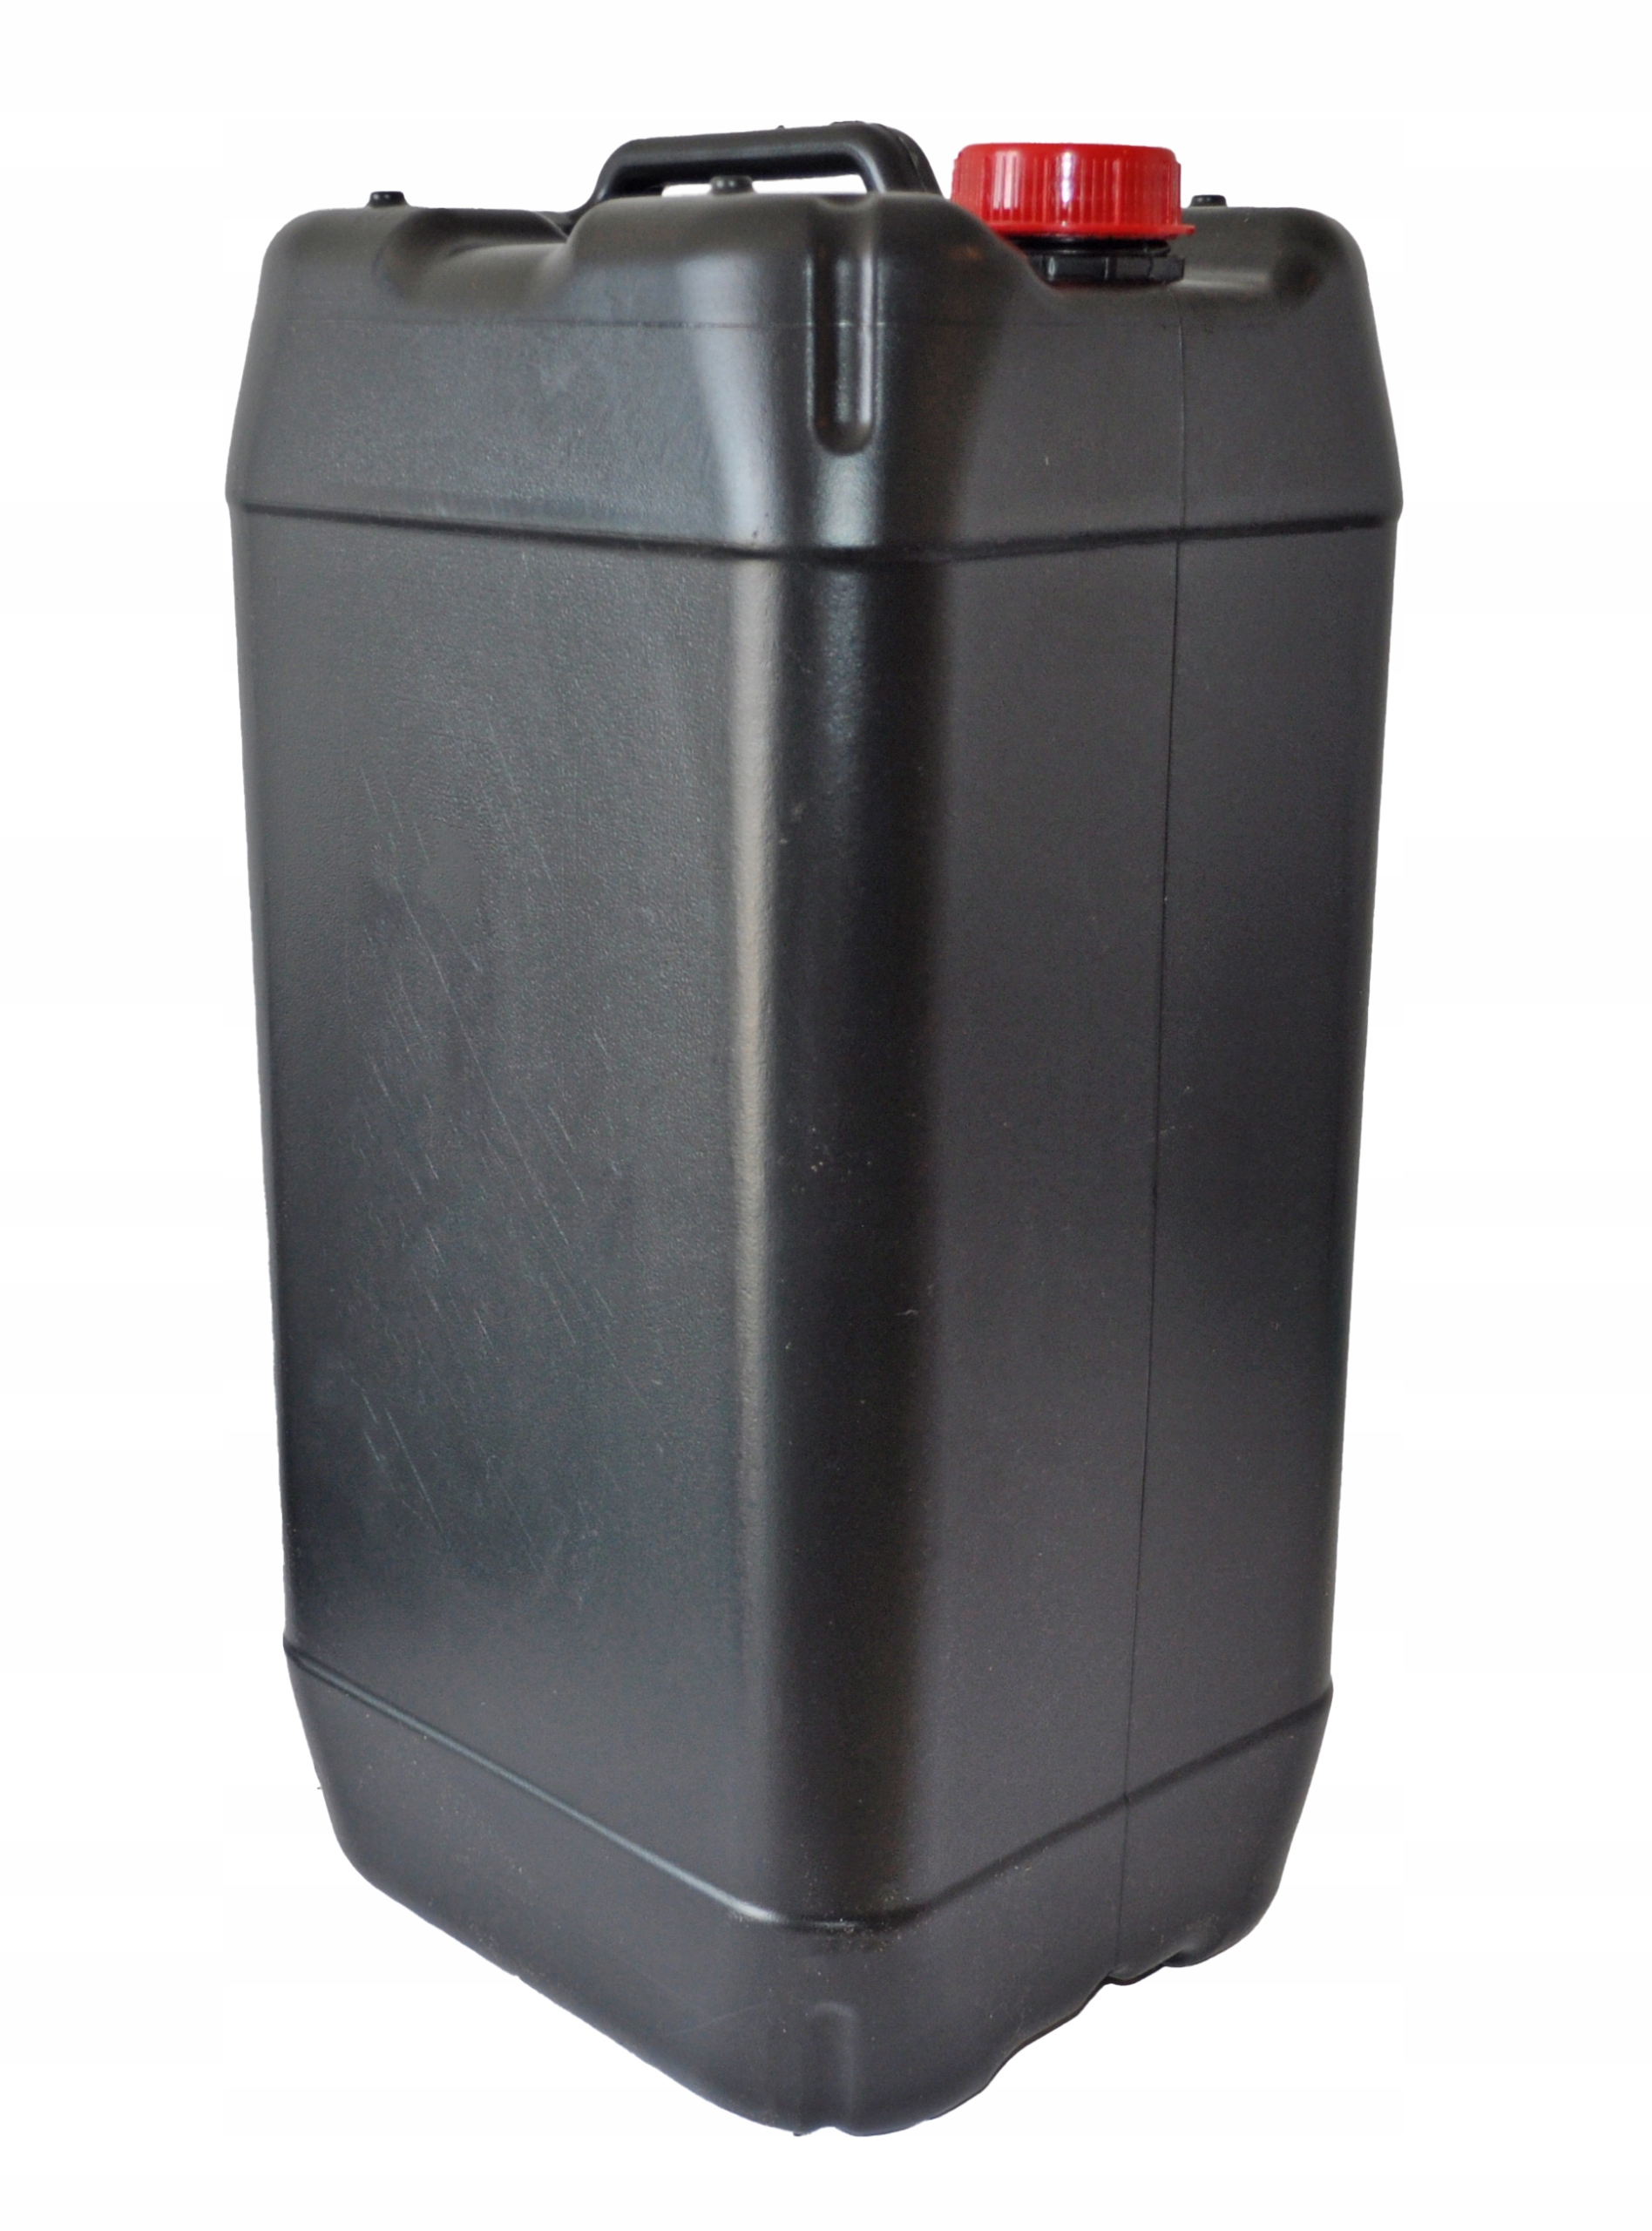 Kanister 30l karnister baniak alkohol paliwo ATEST (30040000) • Cena,  Opinie • Palety i pojemniki 9556299459 • Allegro